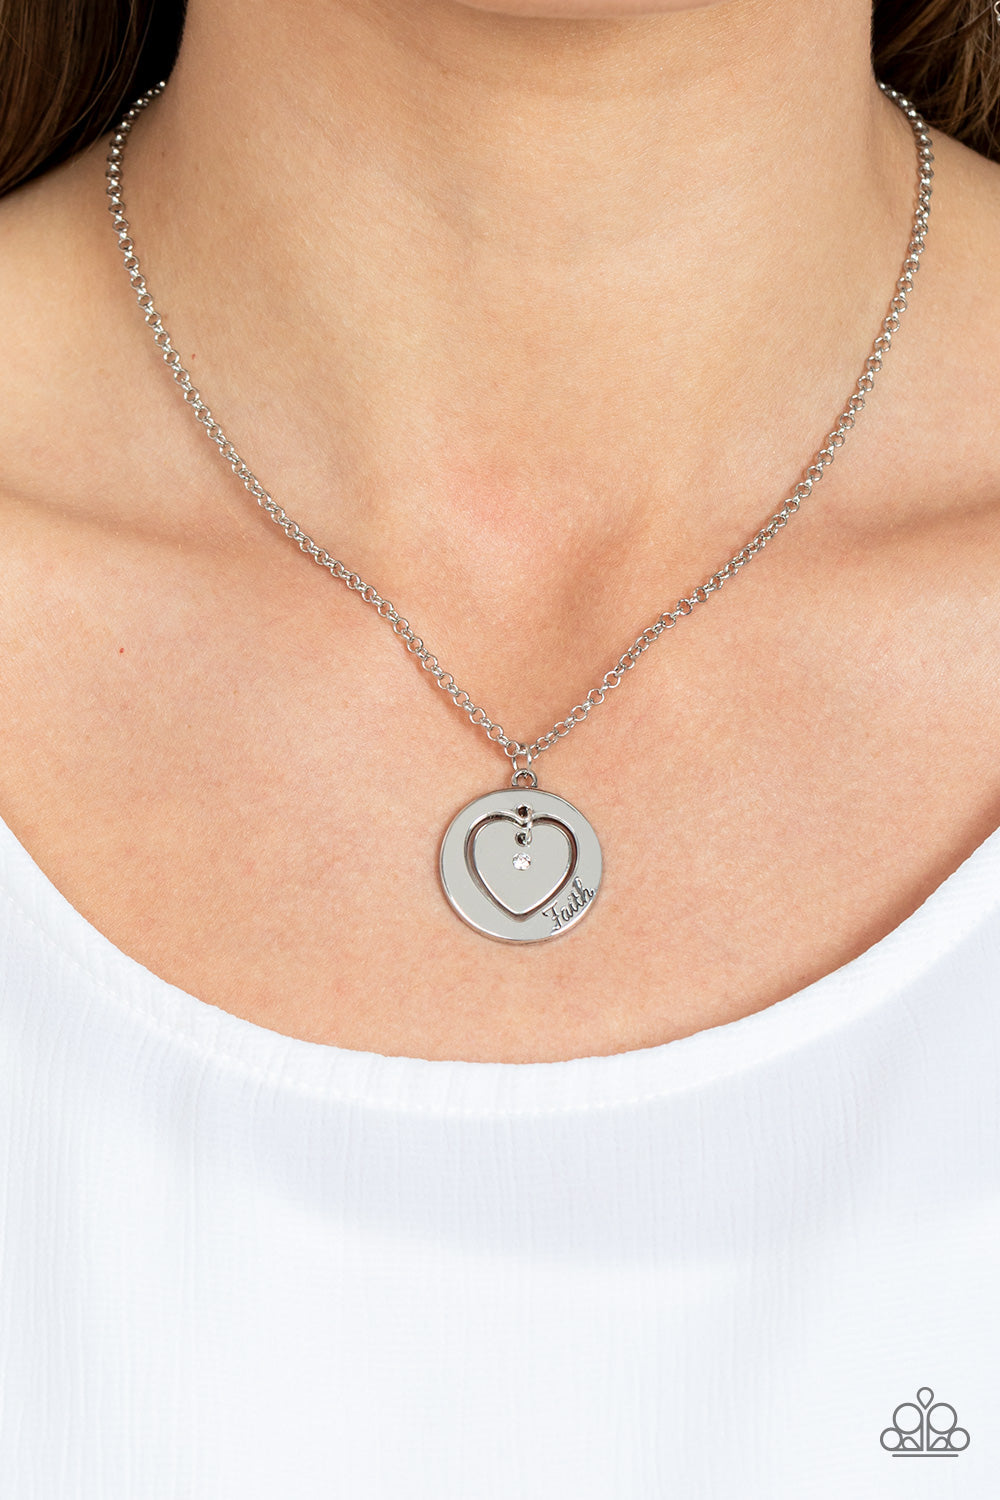 Heart Full of Faith - White Dainty Rhinestone/Silver Heart Charm Pendant Paparazzi Necklace & matching earrings